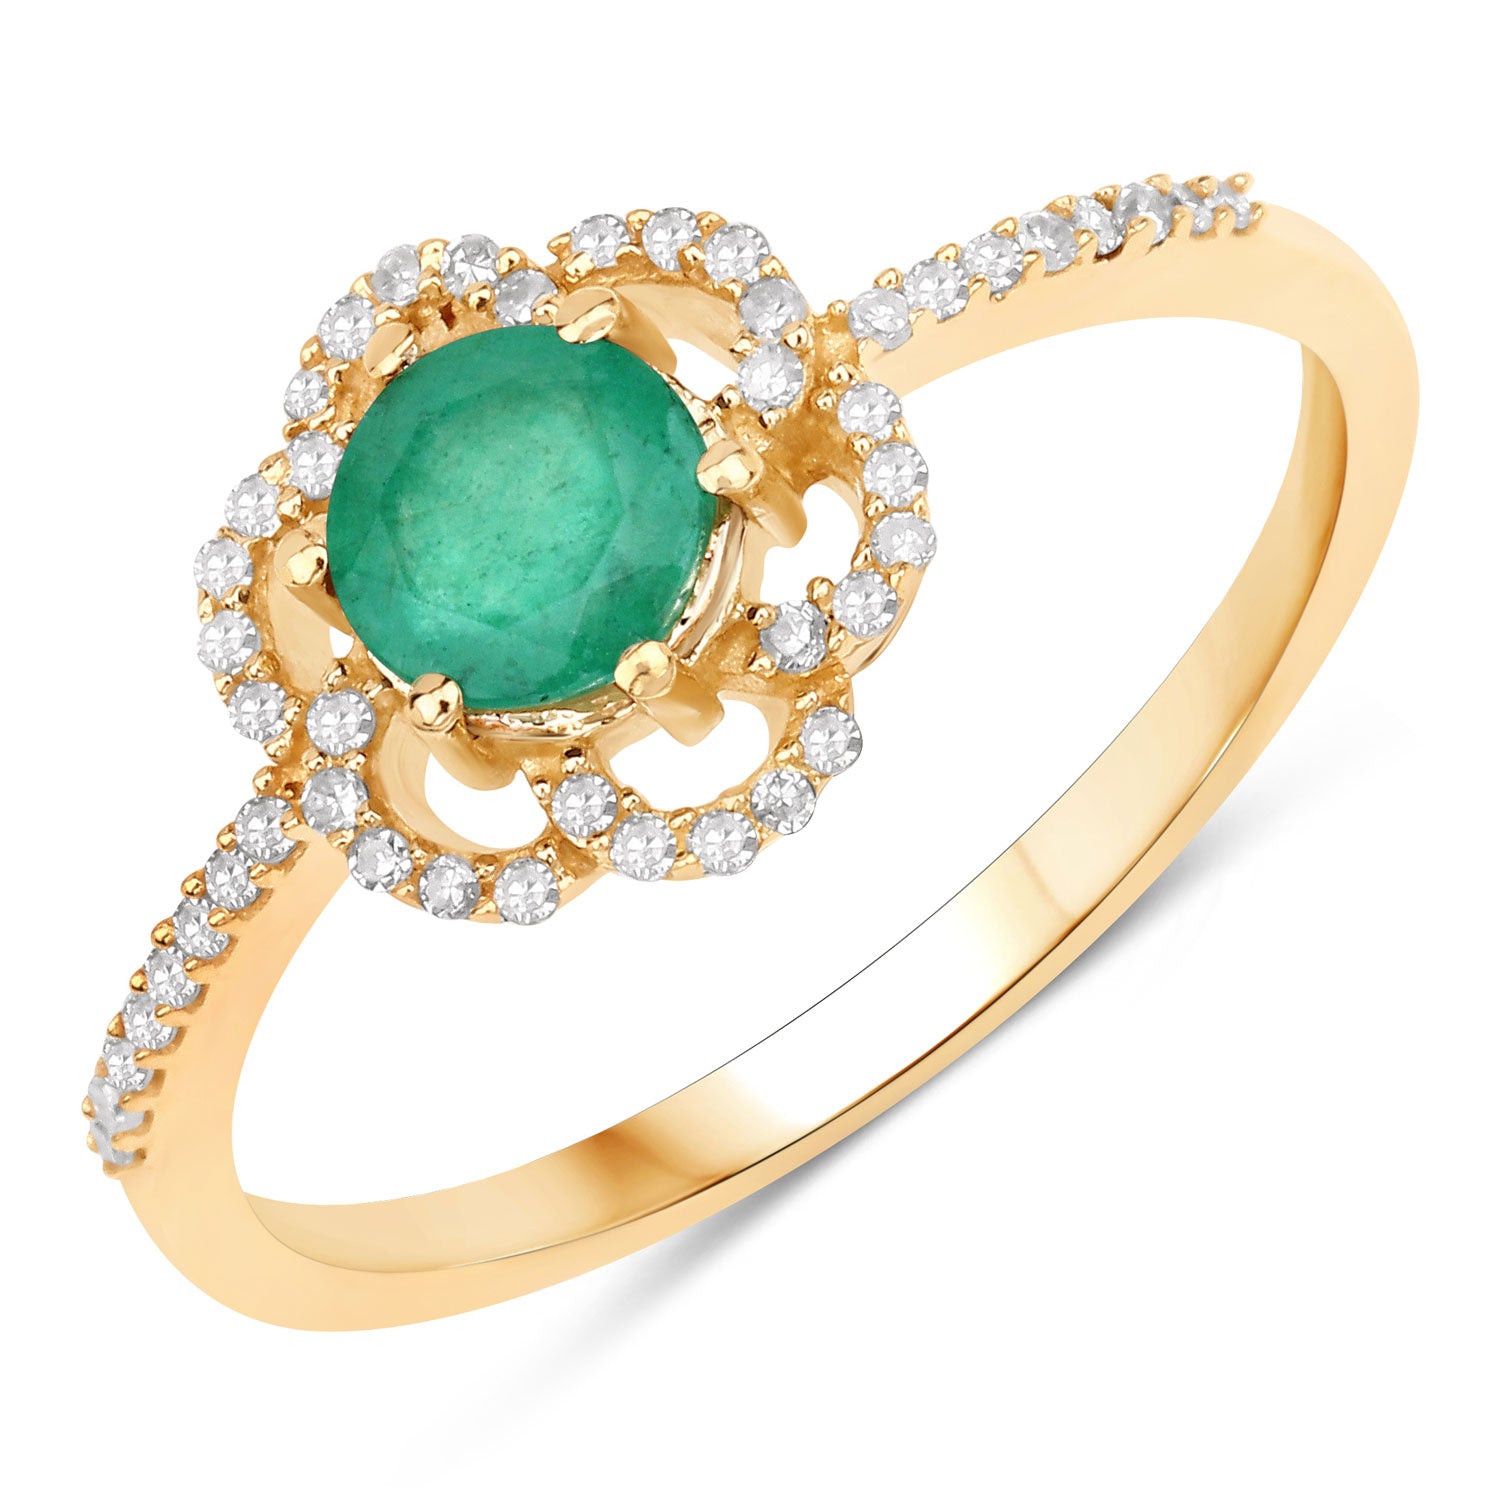 0.55 Carat Genuine Zambian Emerald and White Diamond 14K Yellow Gold Ring